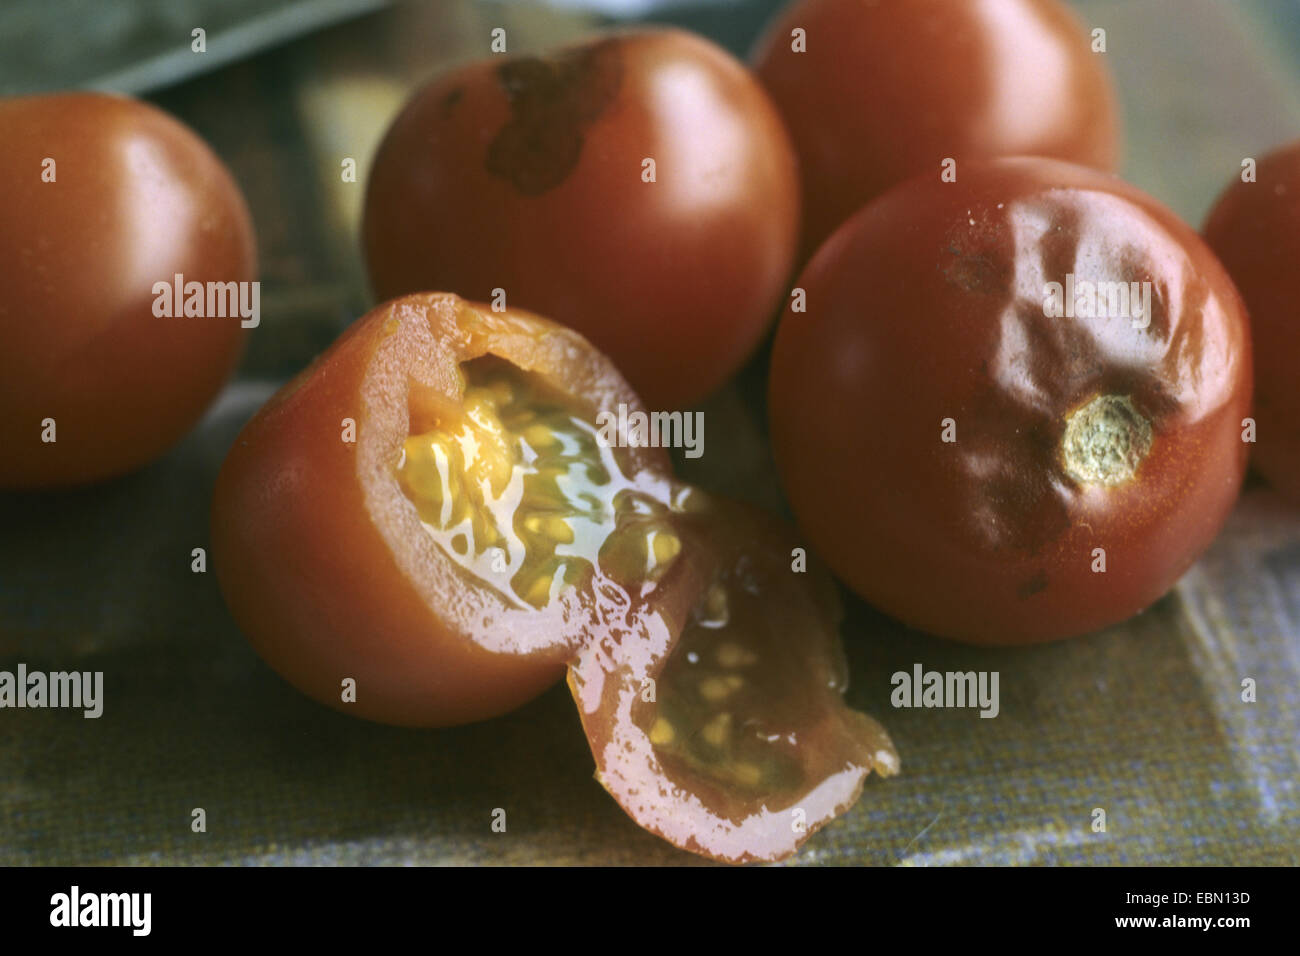 garden tomato (Solanum lycopersicum, Lycopersicon esculentum), rotting tomatoes with Pleospora Stock Photo